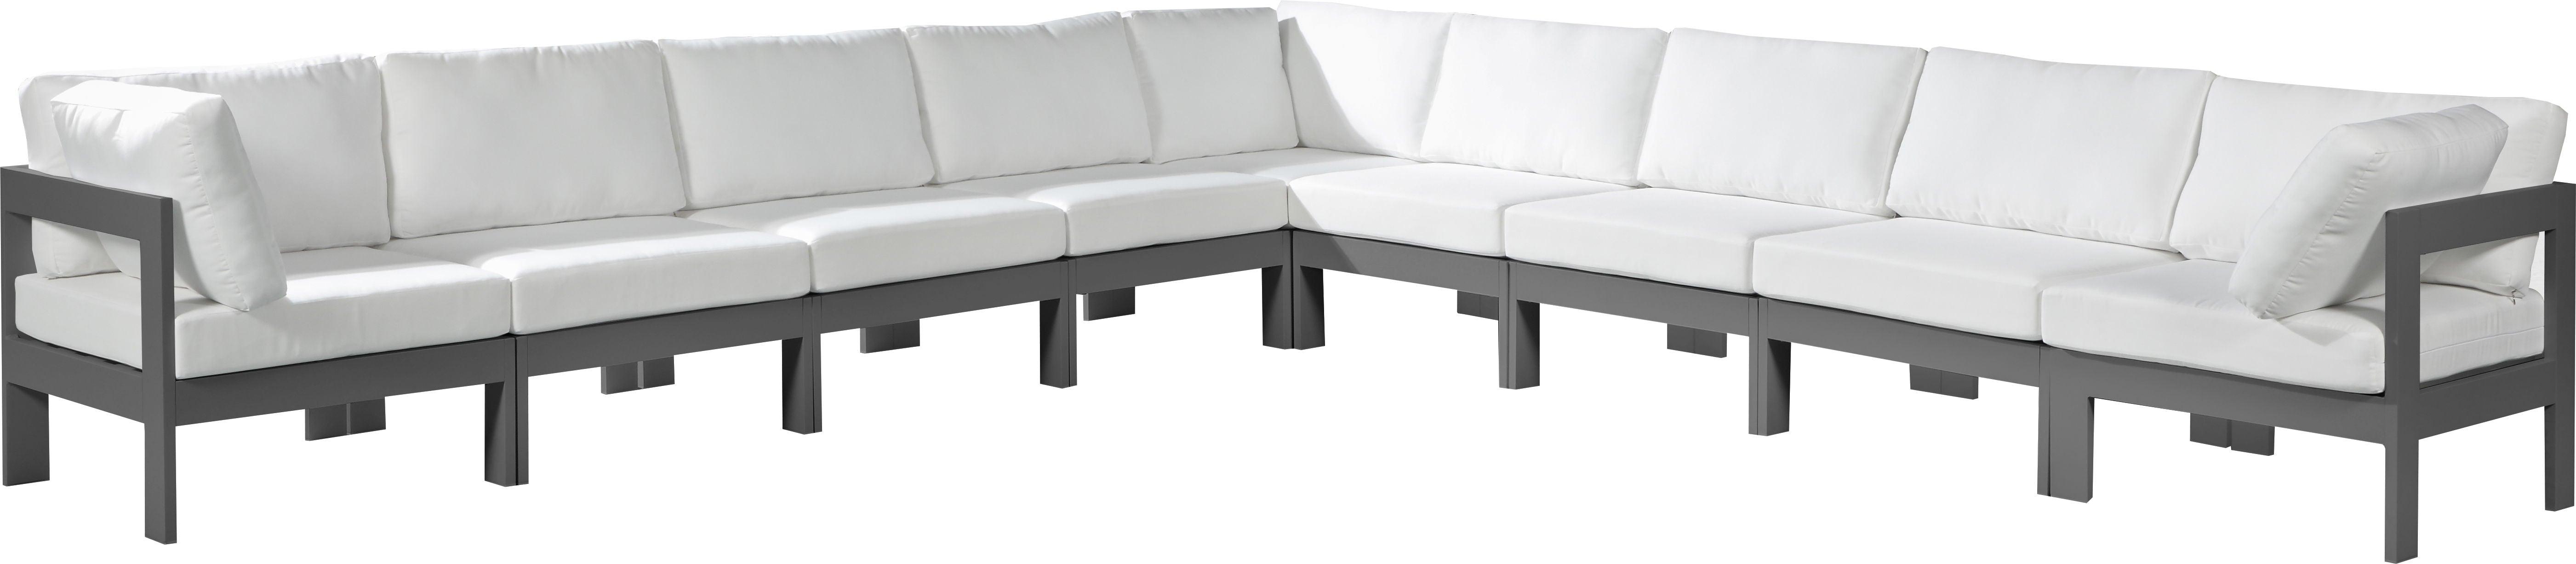 Meridian Furniture - Nizuc - Outdoor Patio Modular Sectional 9 Piece - White - Modern & Contemporary - 5th Avenue Furniture